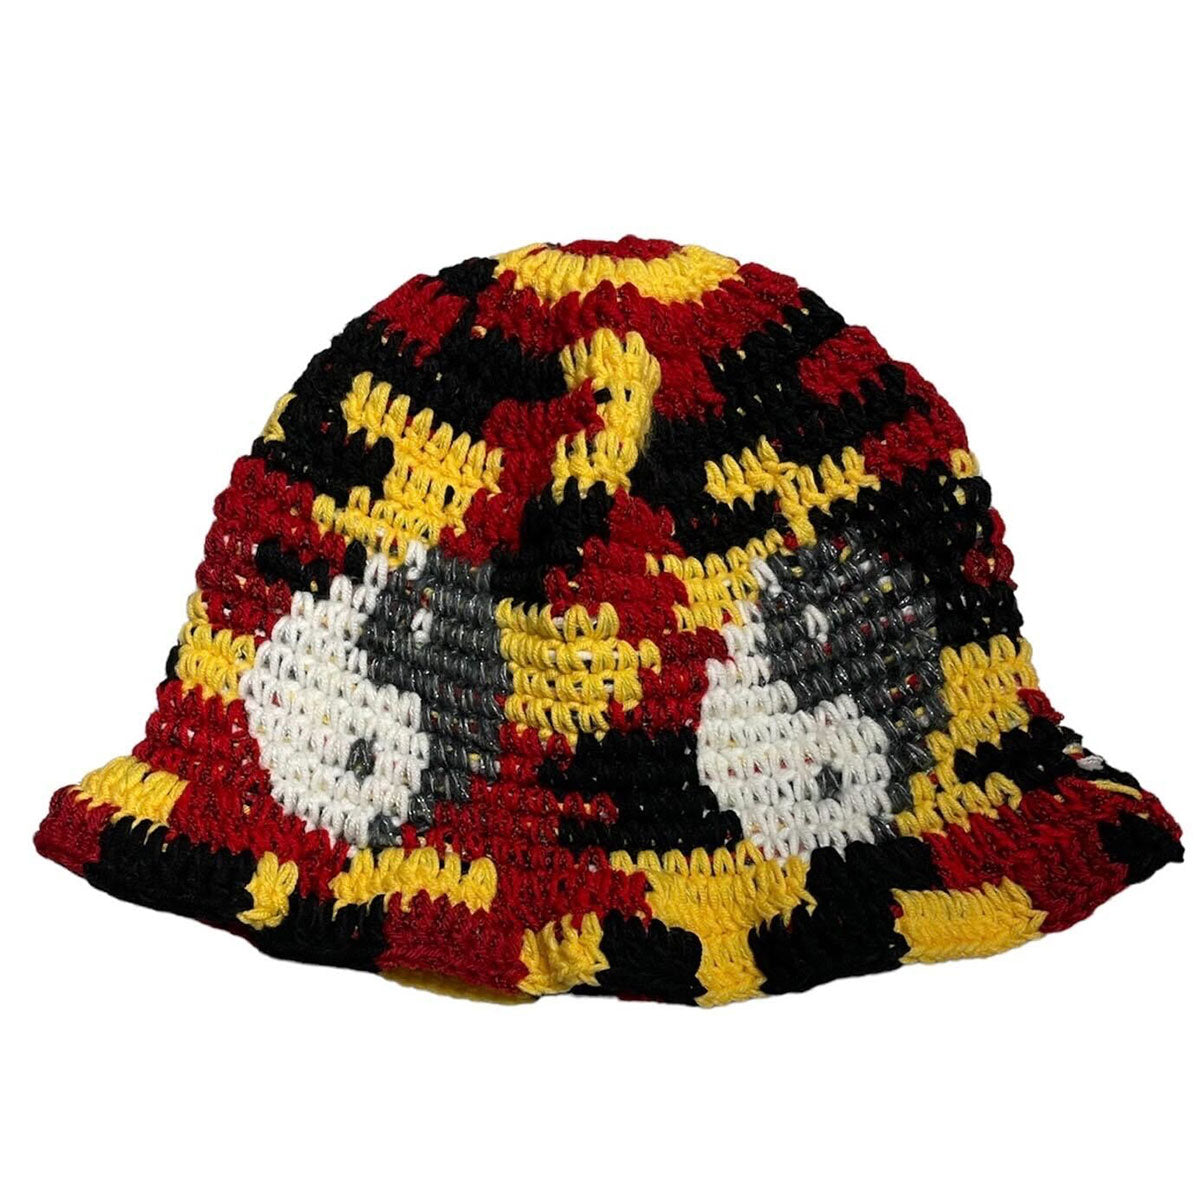 Yinyang Handmade Knit hat